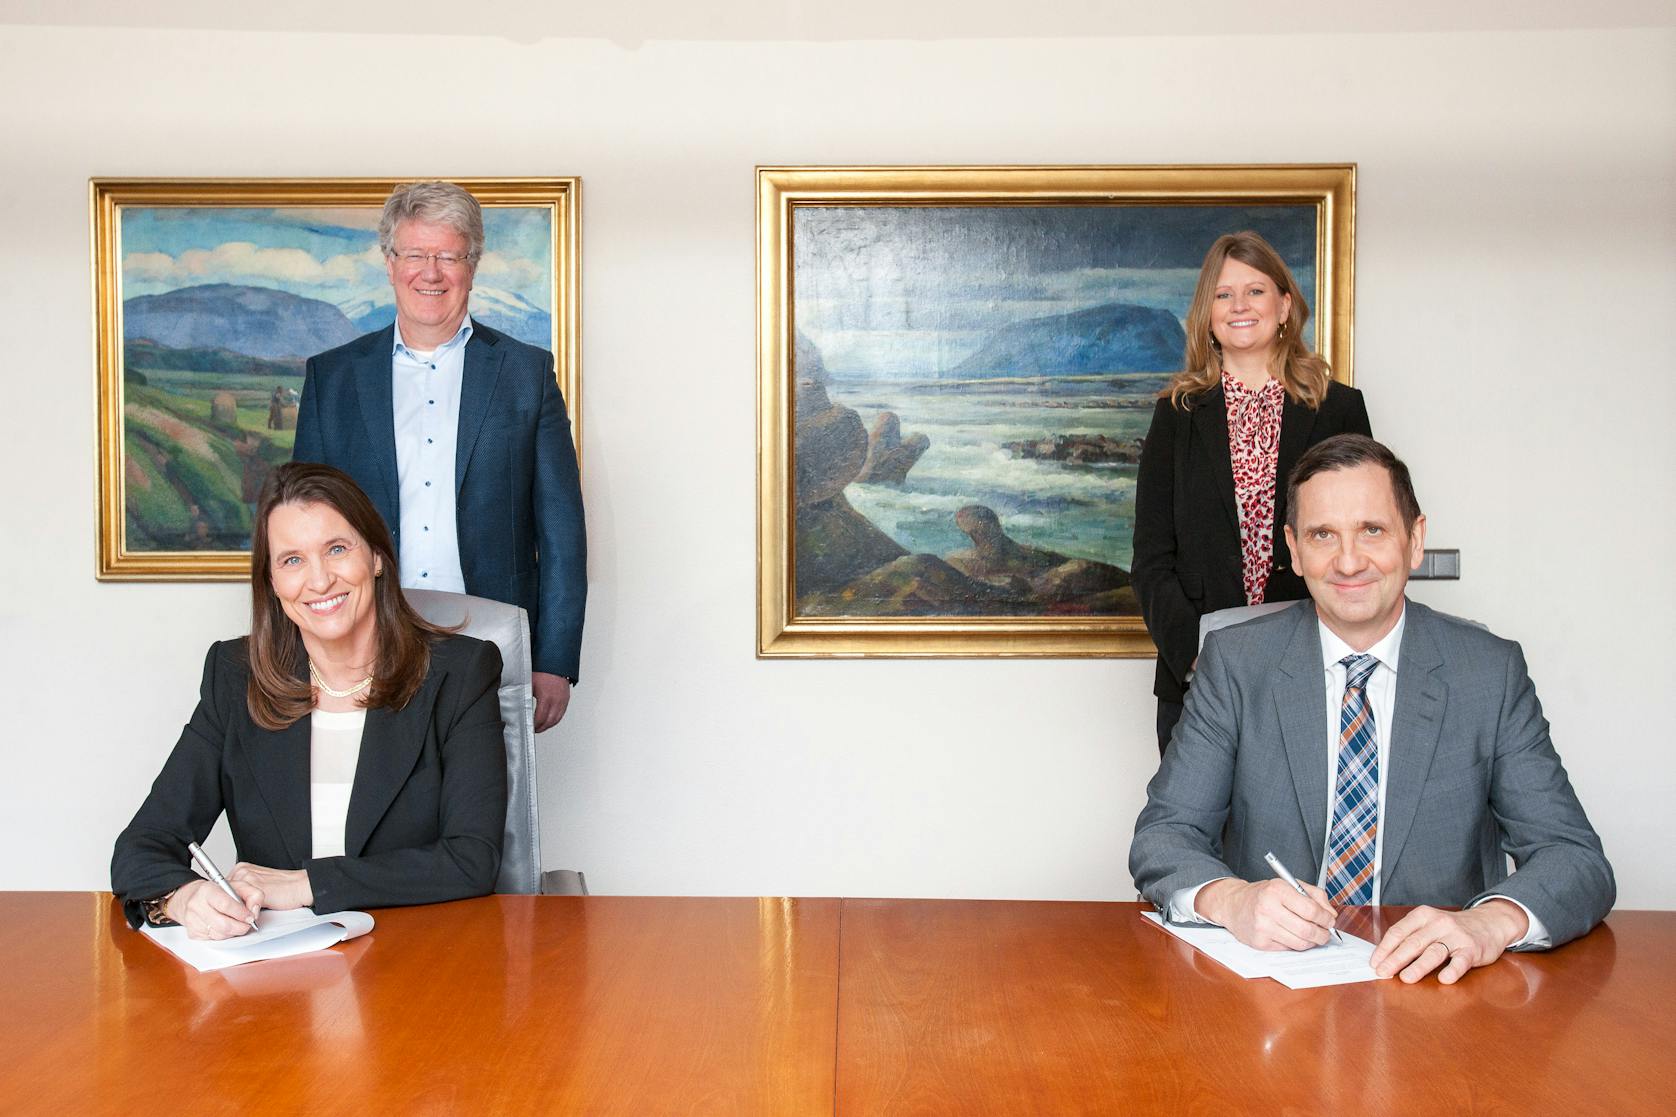 Signing the amendment to the power purchase contract are Hörður Arnarson, CEO of Landsvirkjun and Rannveig Rist, CEO of Rio Tinto Iceland.  Attending are Tinna Traustadóttir, Executive Vice President of Sales and Customer Services at Landsvirkjun and Sigurður Þór Ásgeirsson, CFO of Rio Tinto Iceland.